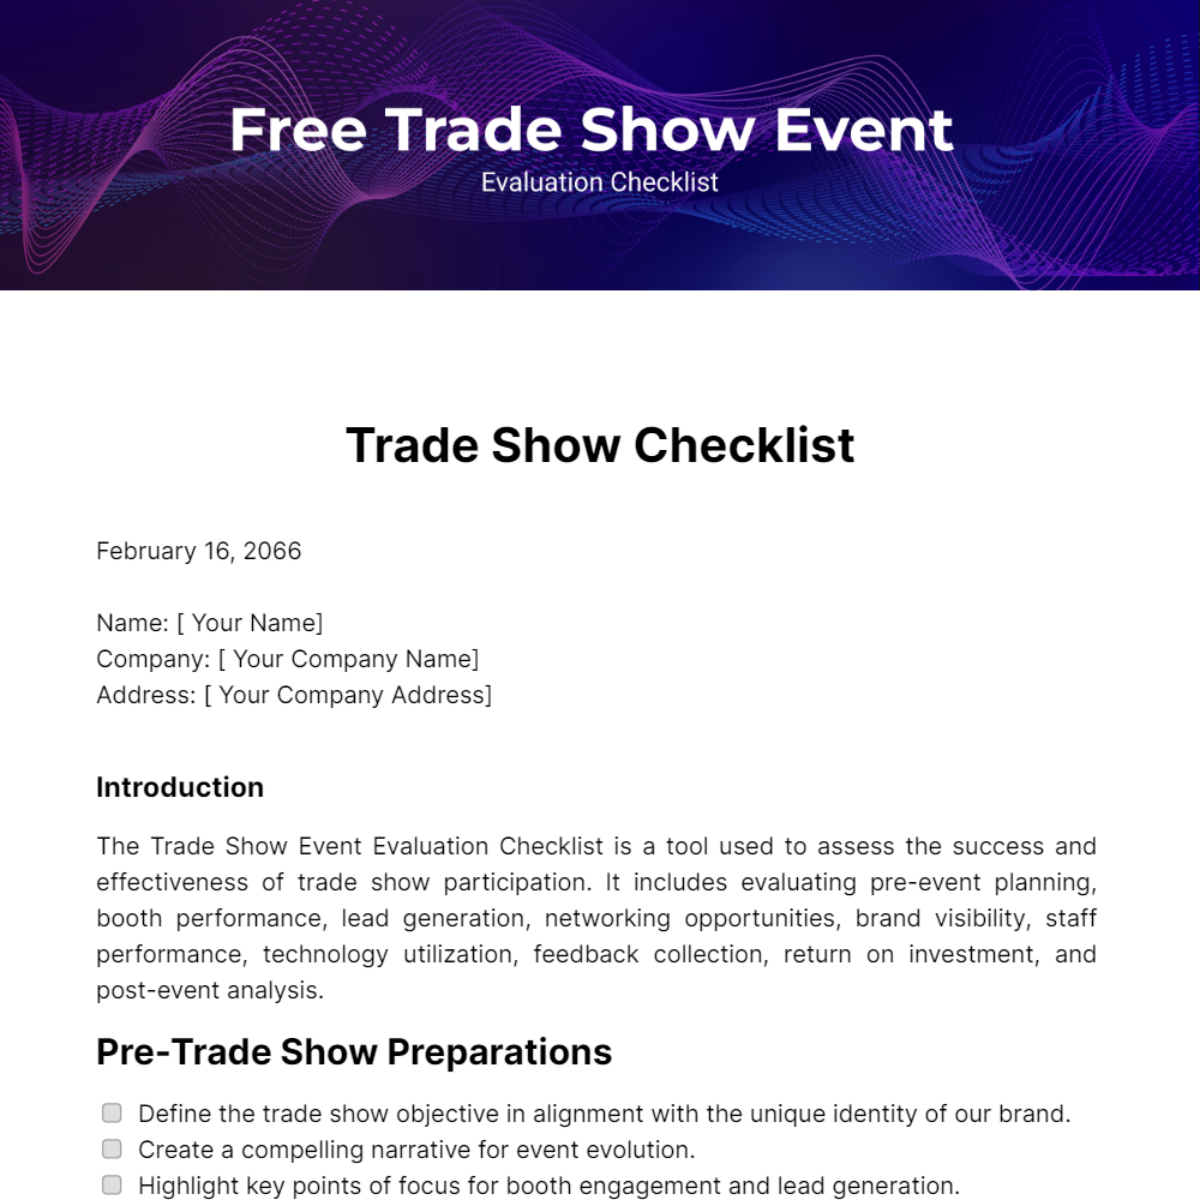 Free Trade Show Event Evaluation Checklist Template